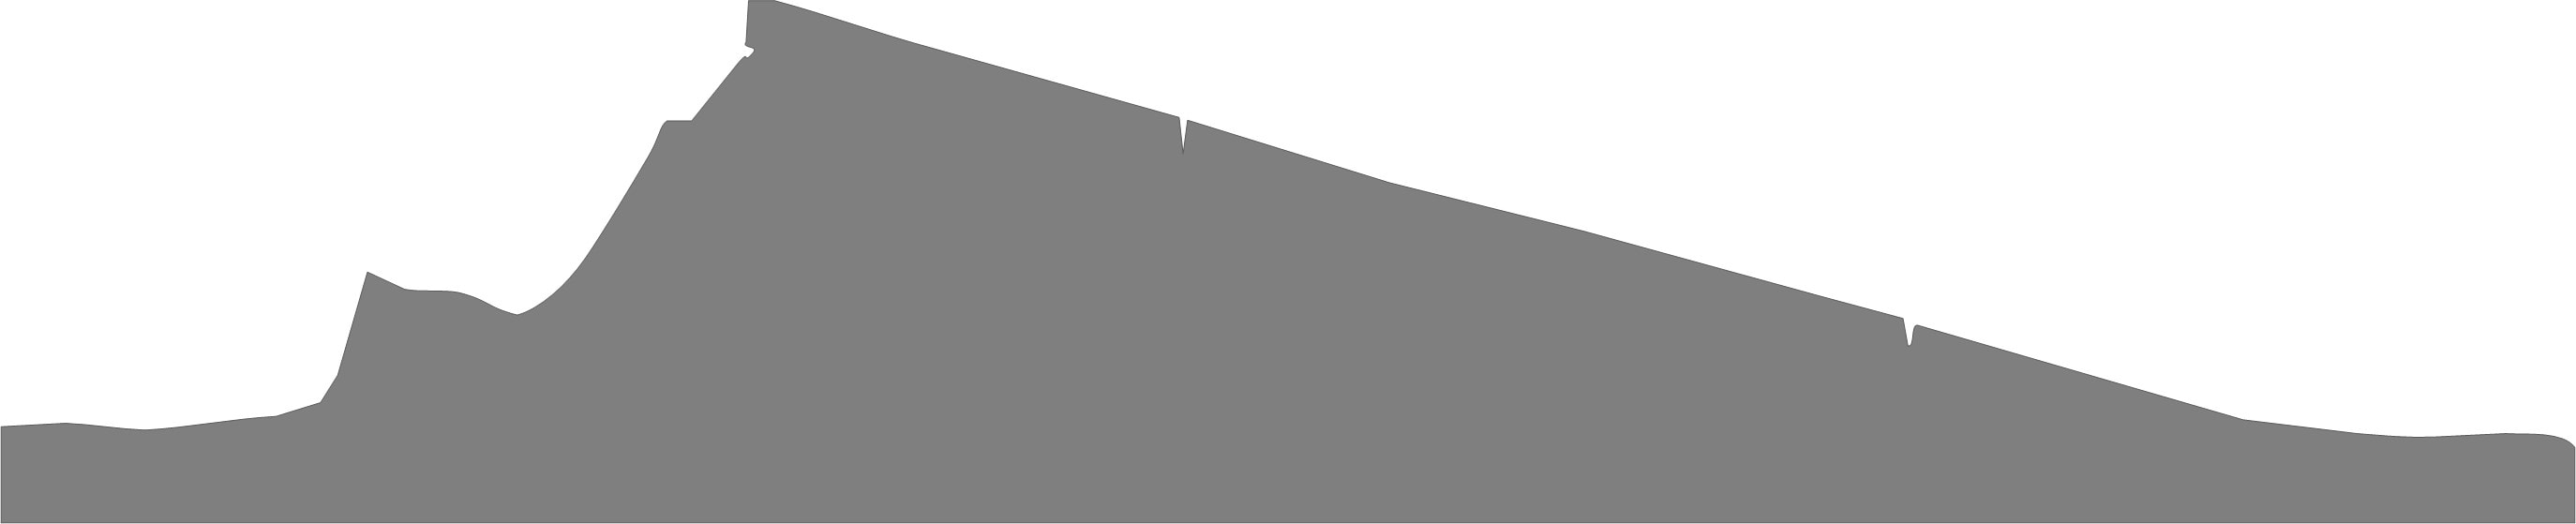 Hogback ridge profile diagram